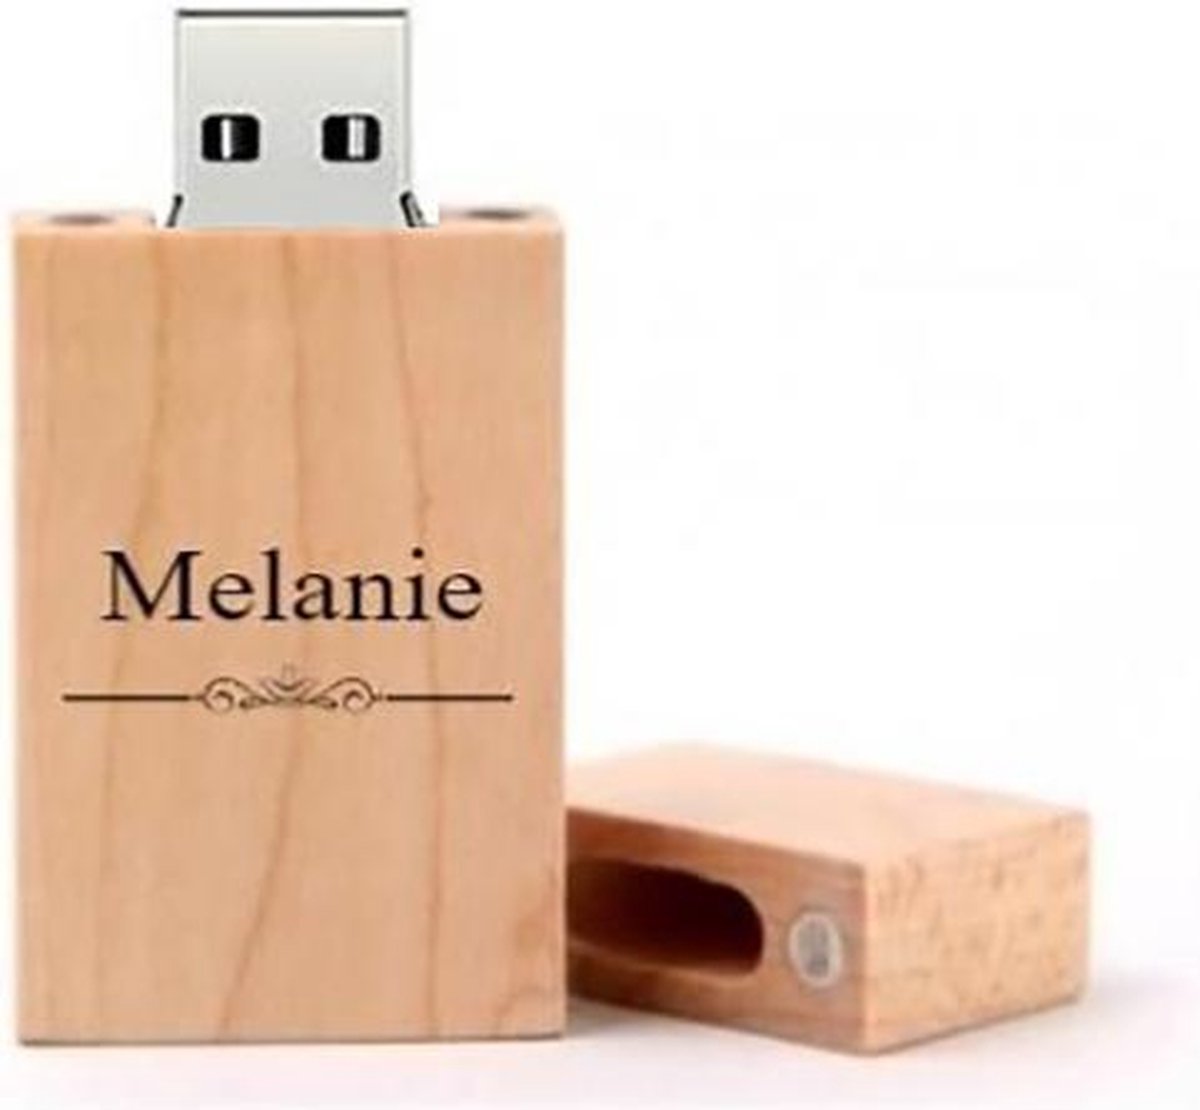 Melanie naam kado verjaardagscadeau cadeau usb stick 32GB